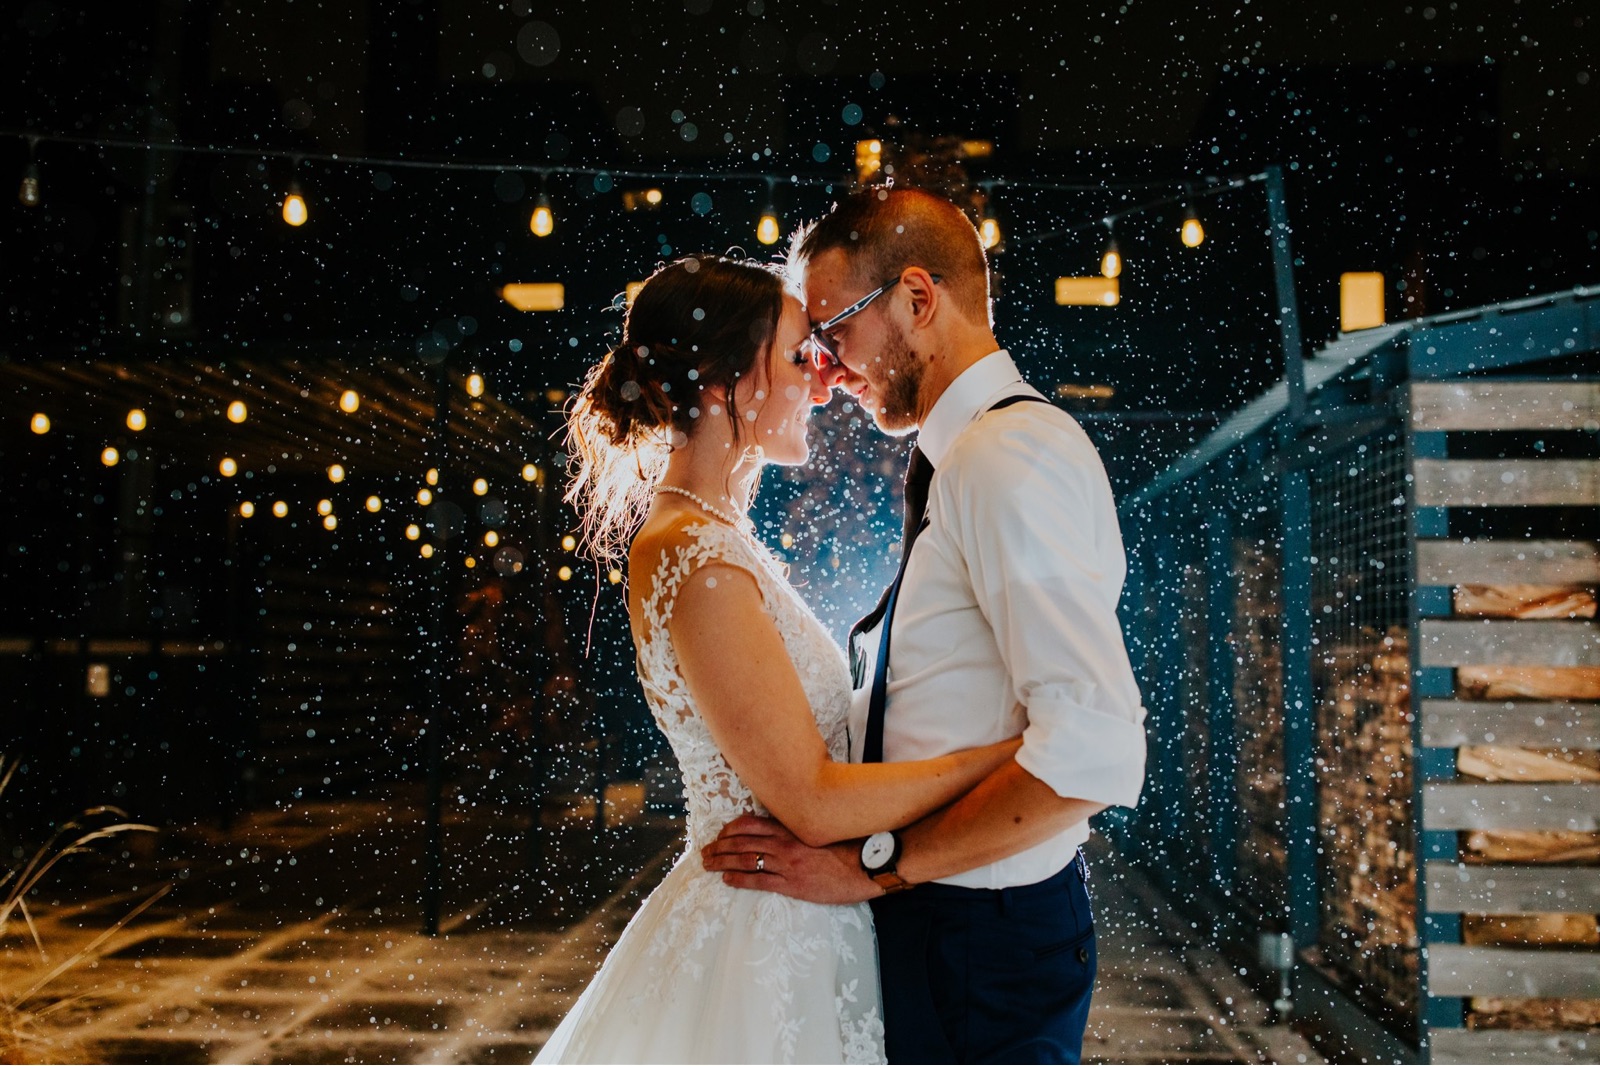 snowy night shot at wedding reception in michigan